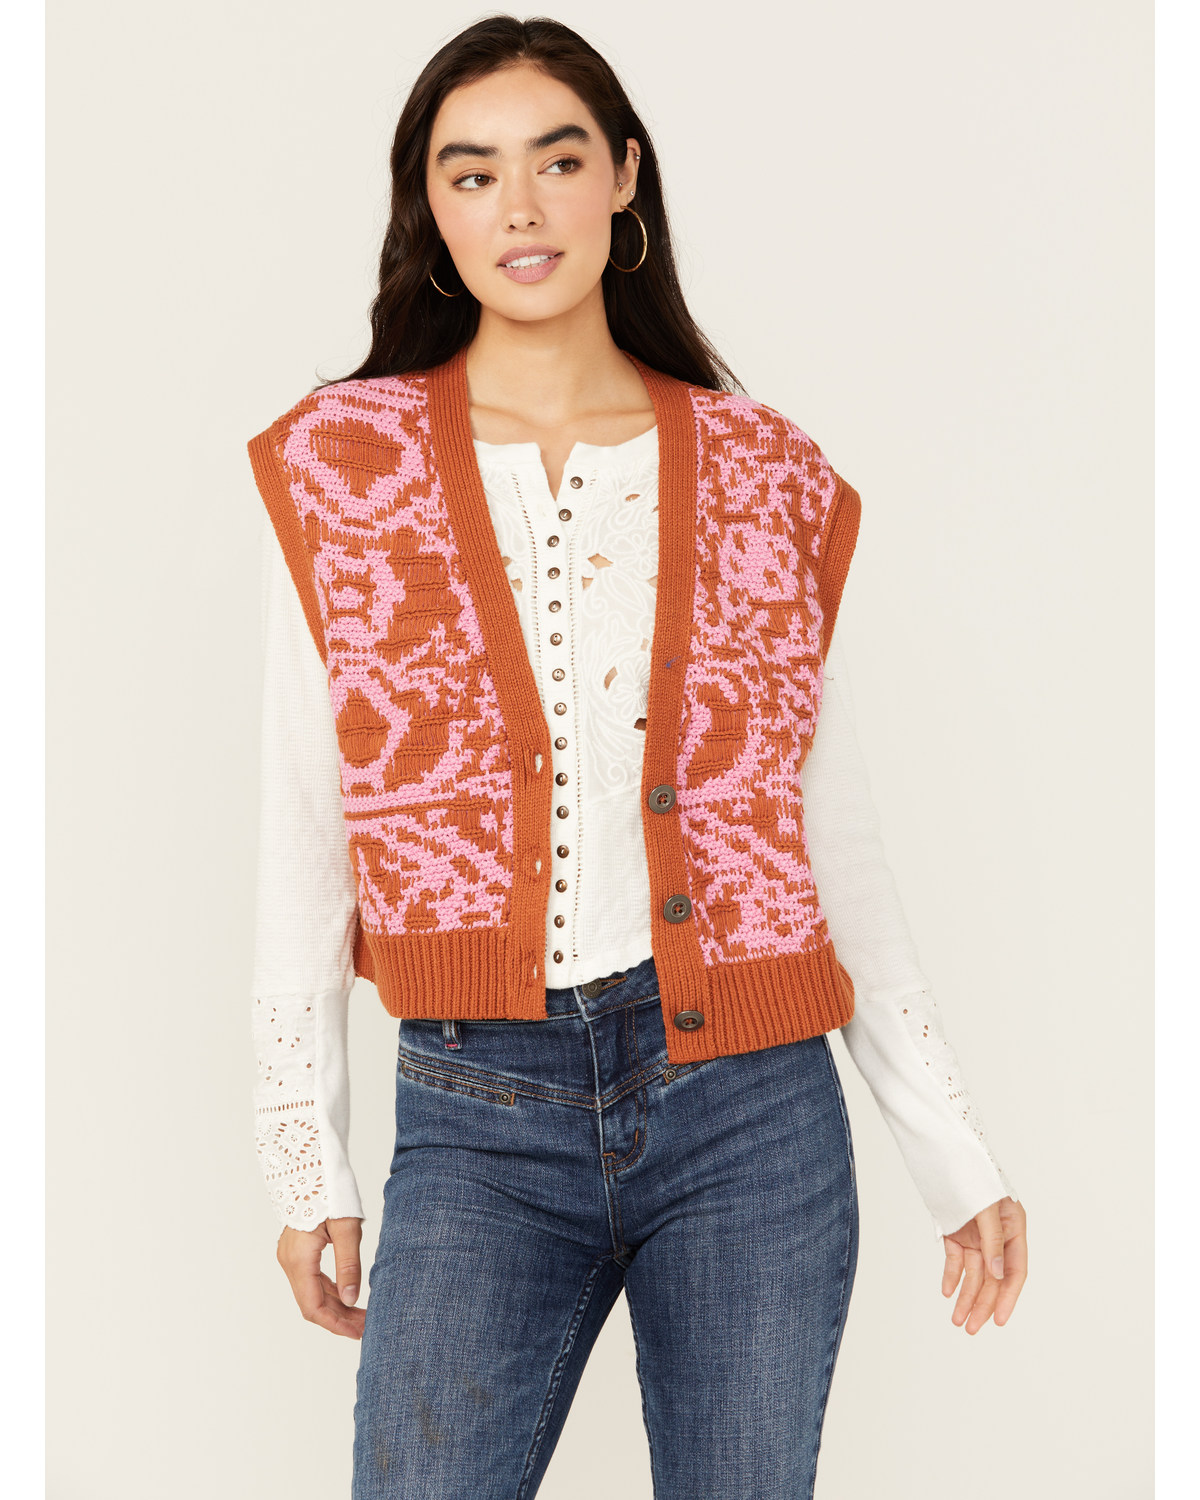 Free People Women's Tapestry Sweater Vest